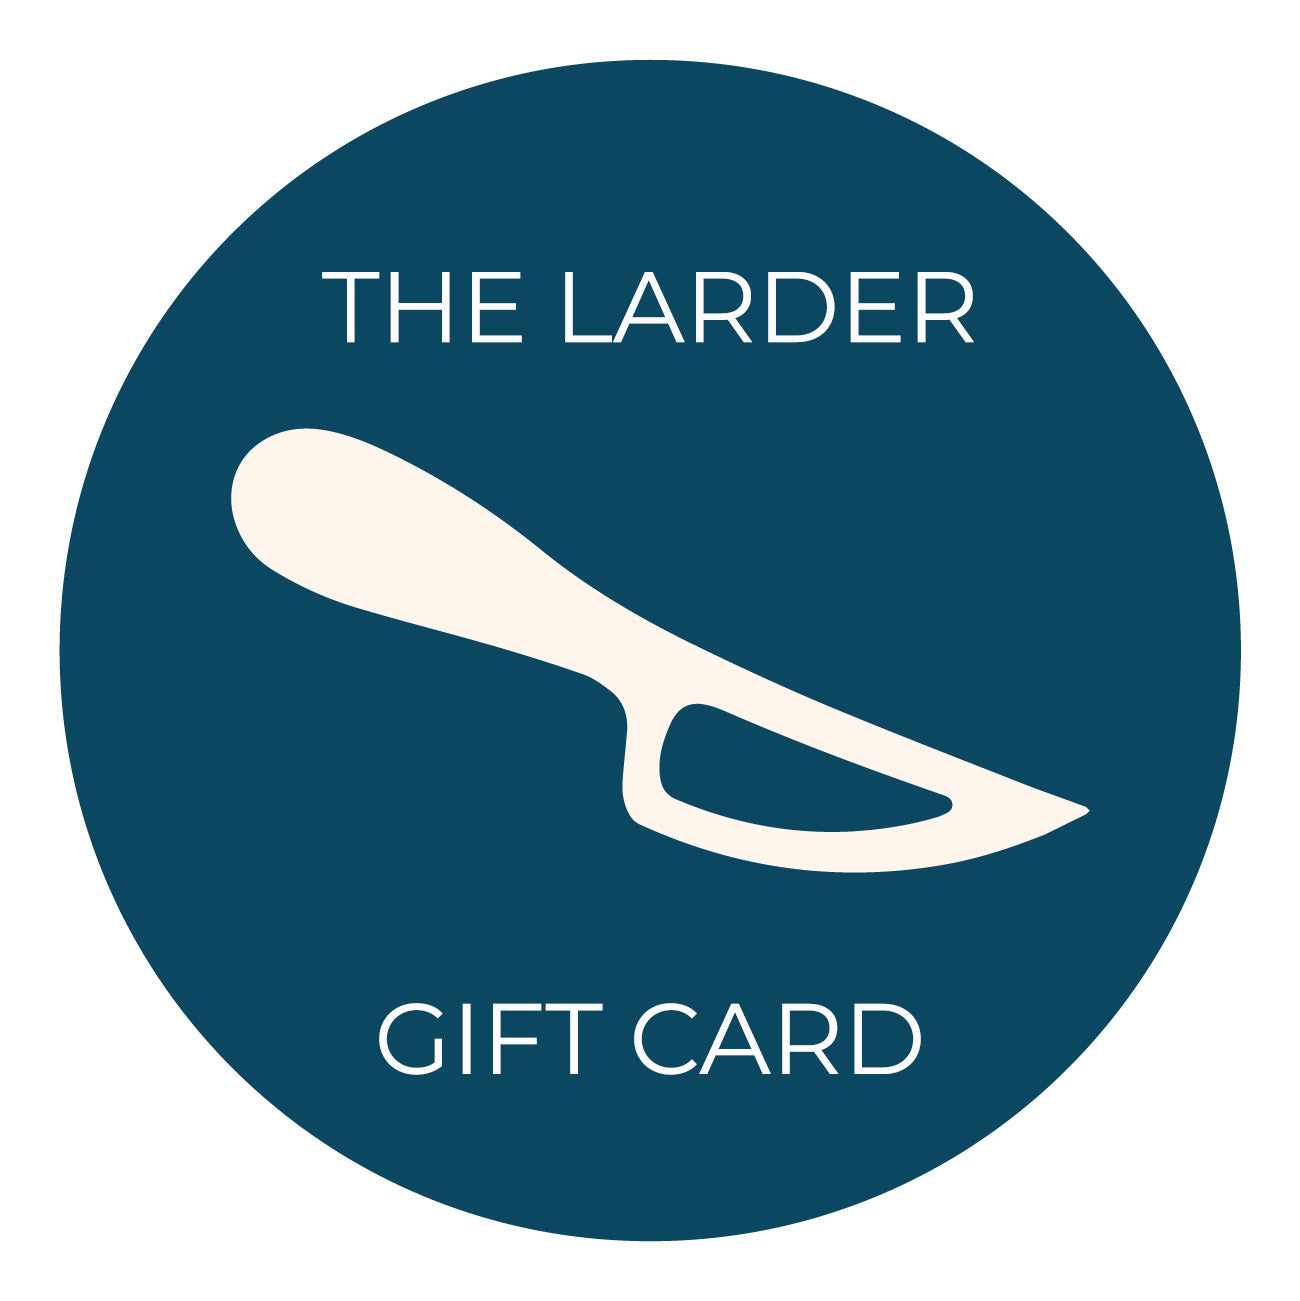 The Larder Gift Card